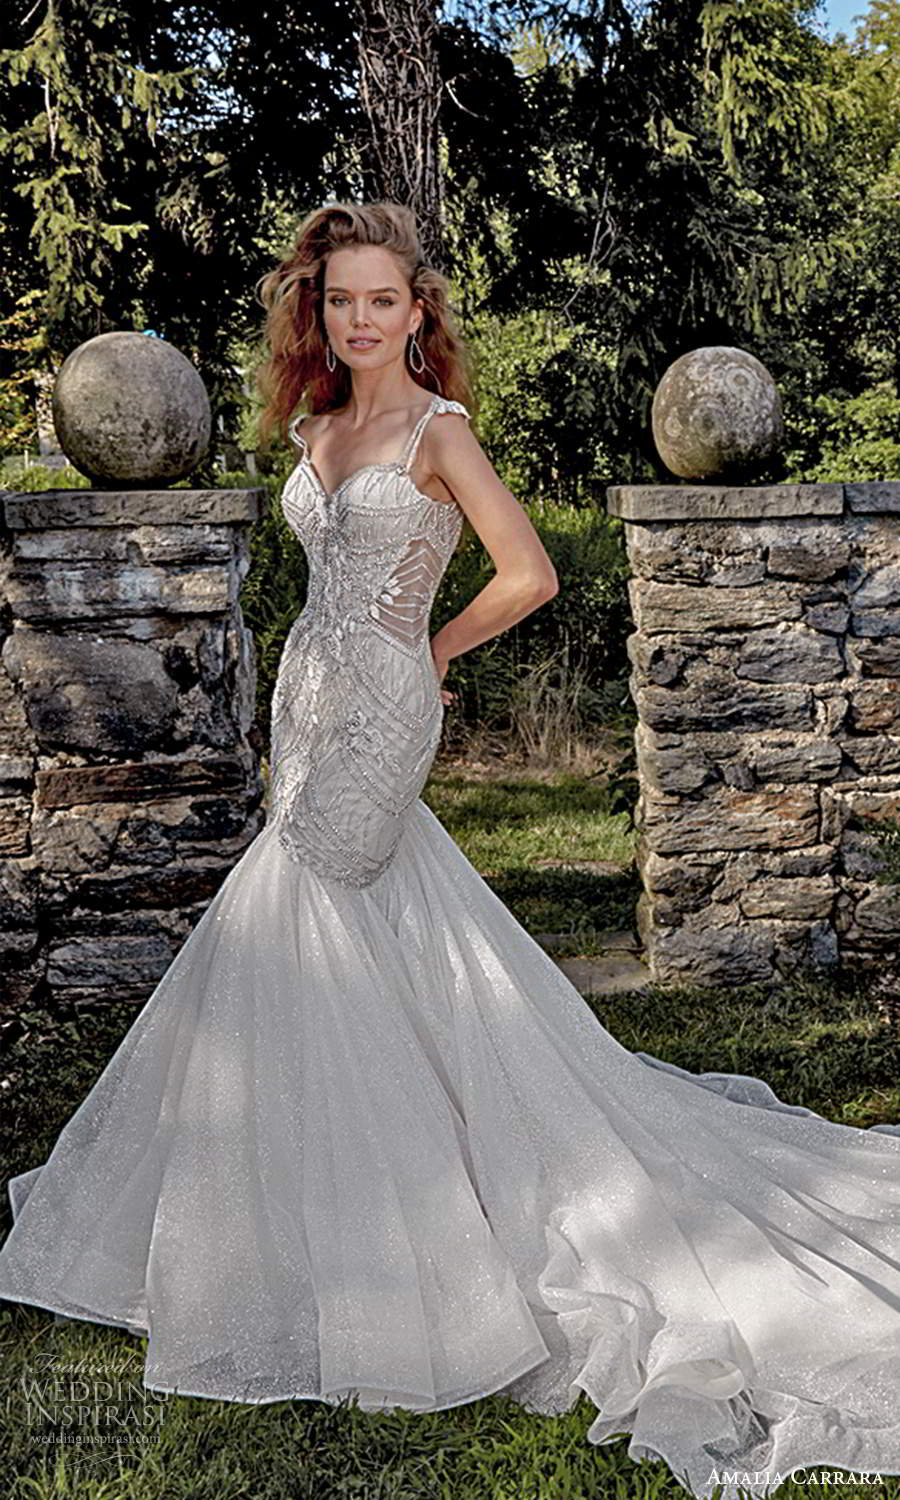 amalia carrara 2021 bridal sleeveless straps sweetheart neckline heavily embellished bodice fit flare mermaid wedding dress chapel train (4) sv